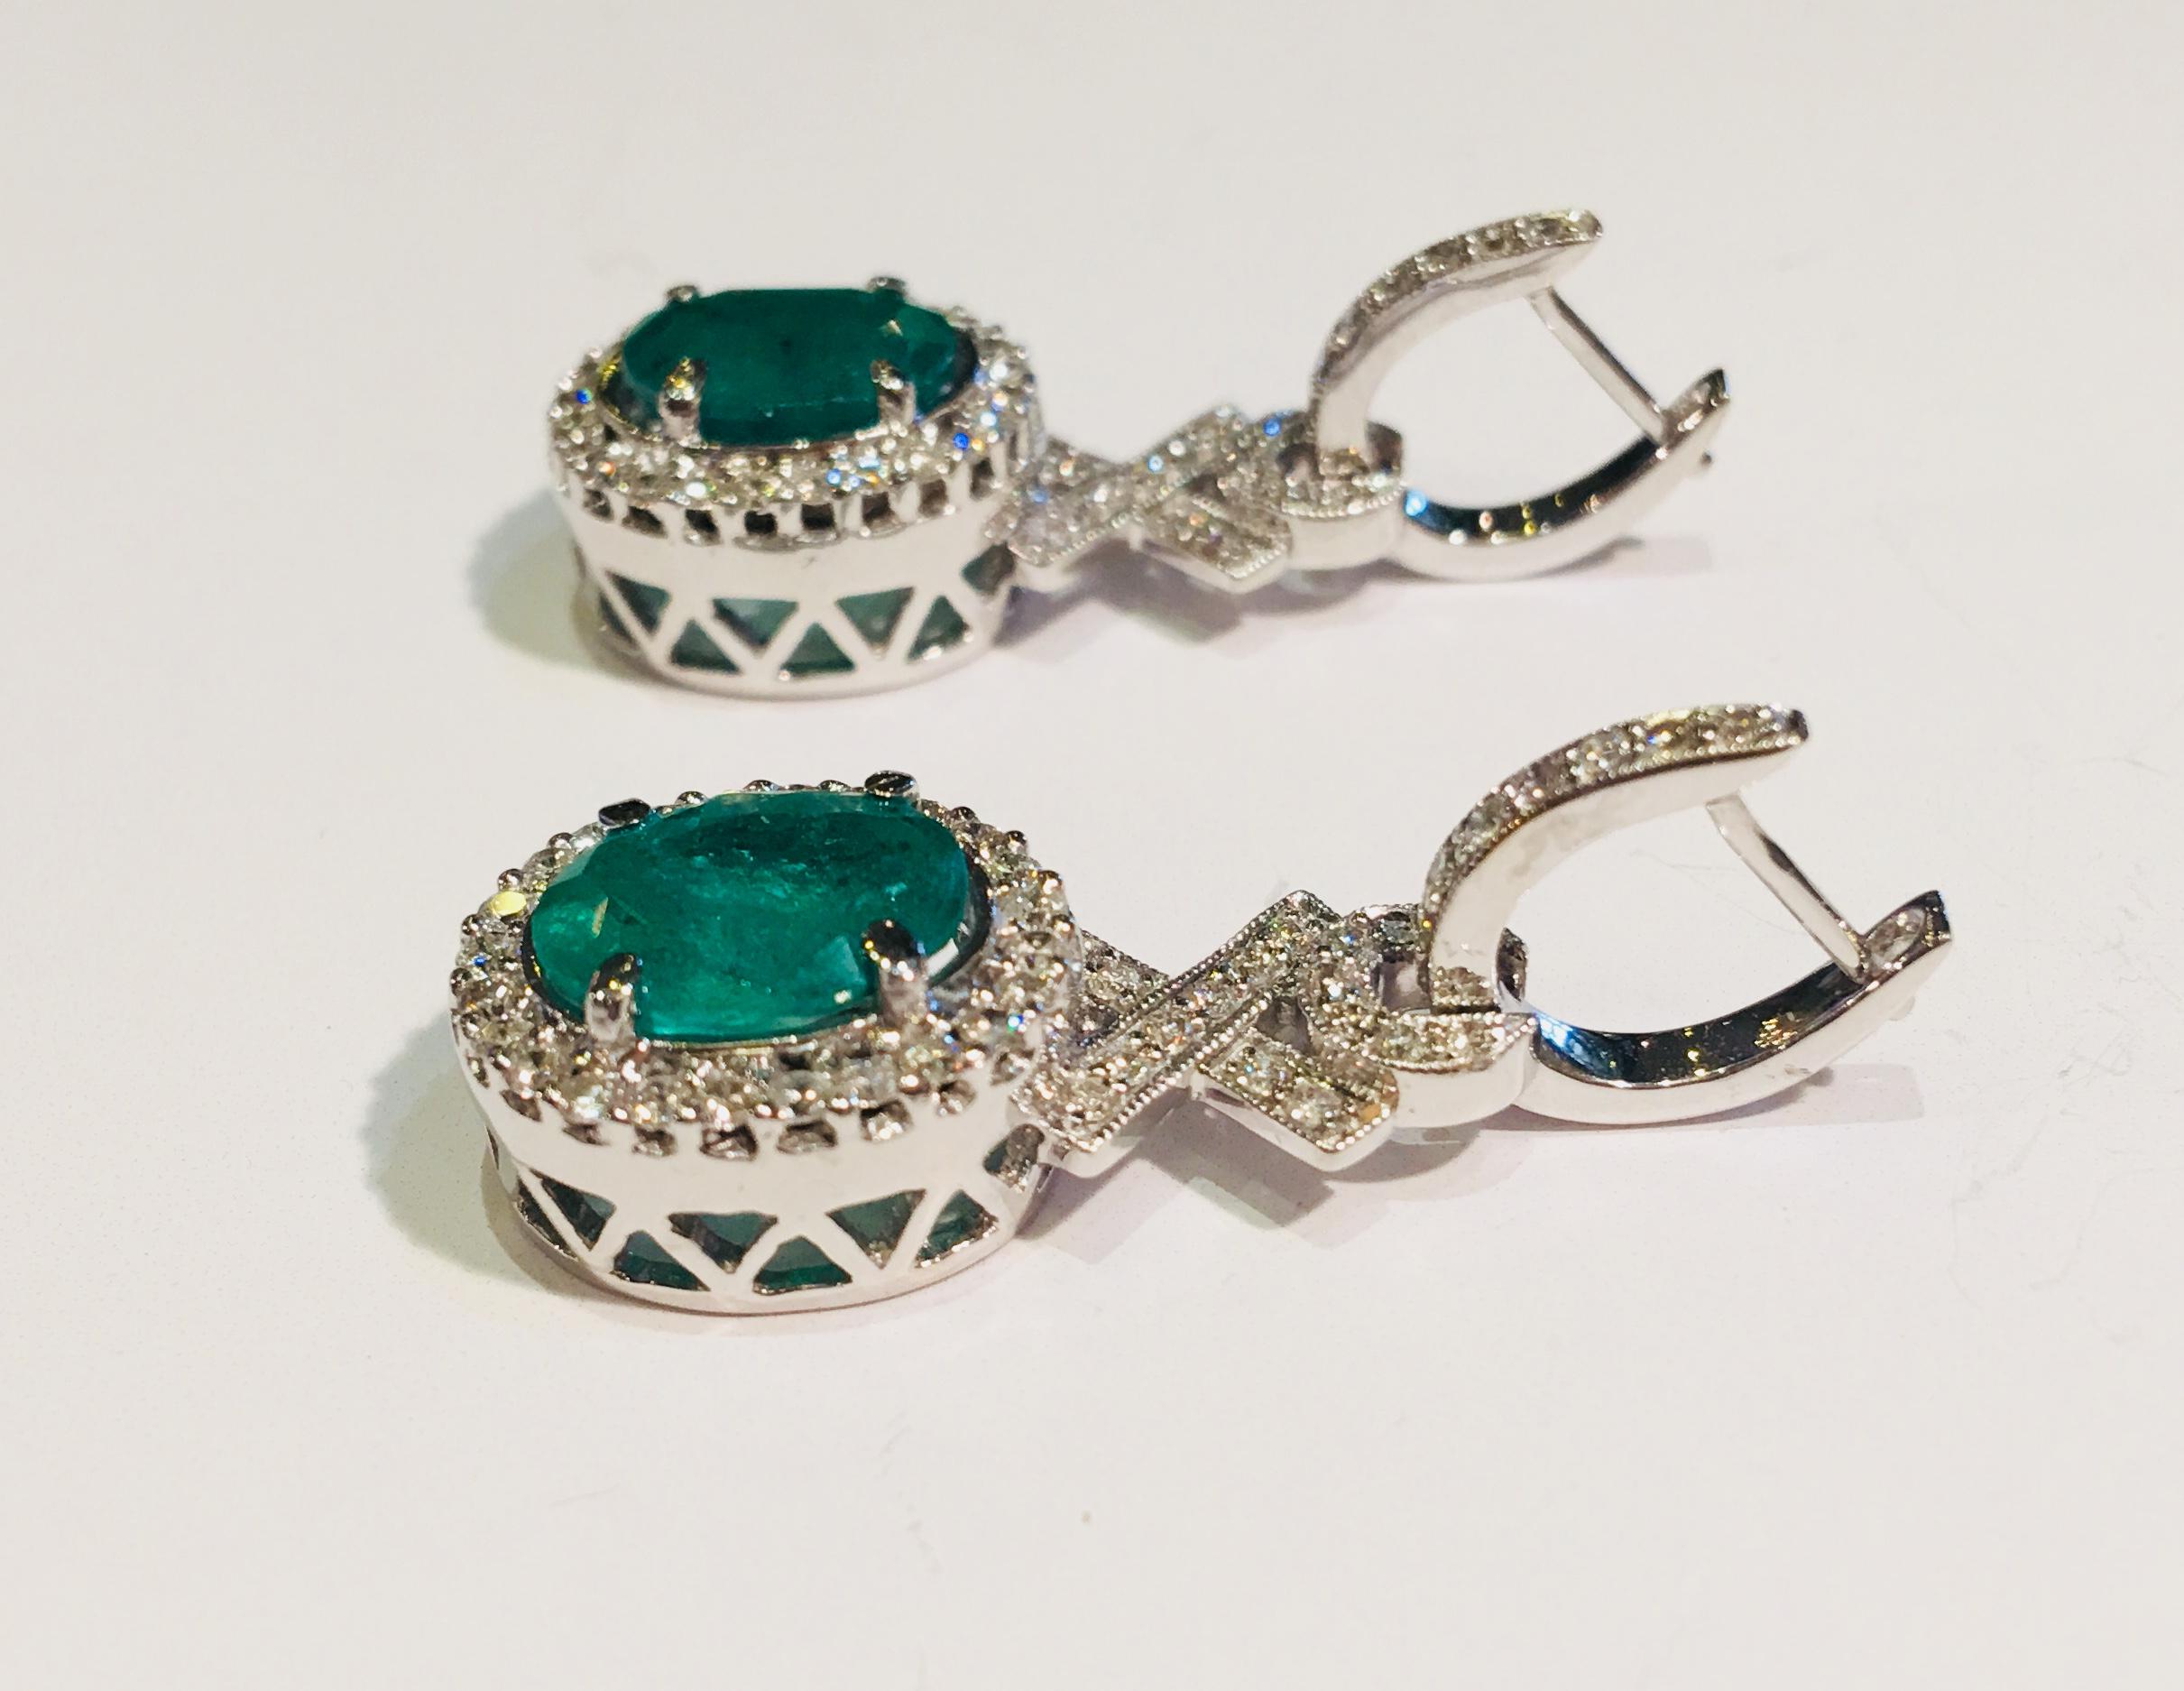 emerald dangling earrings